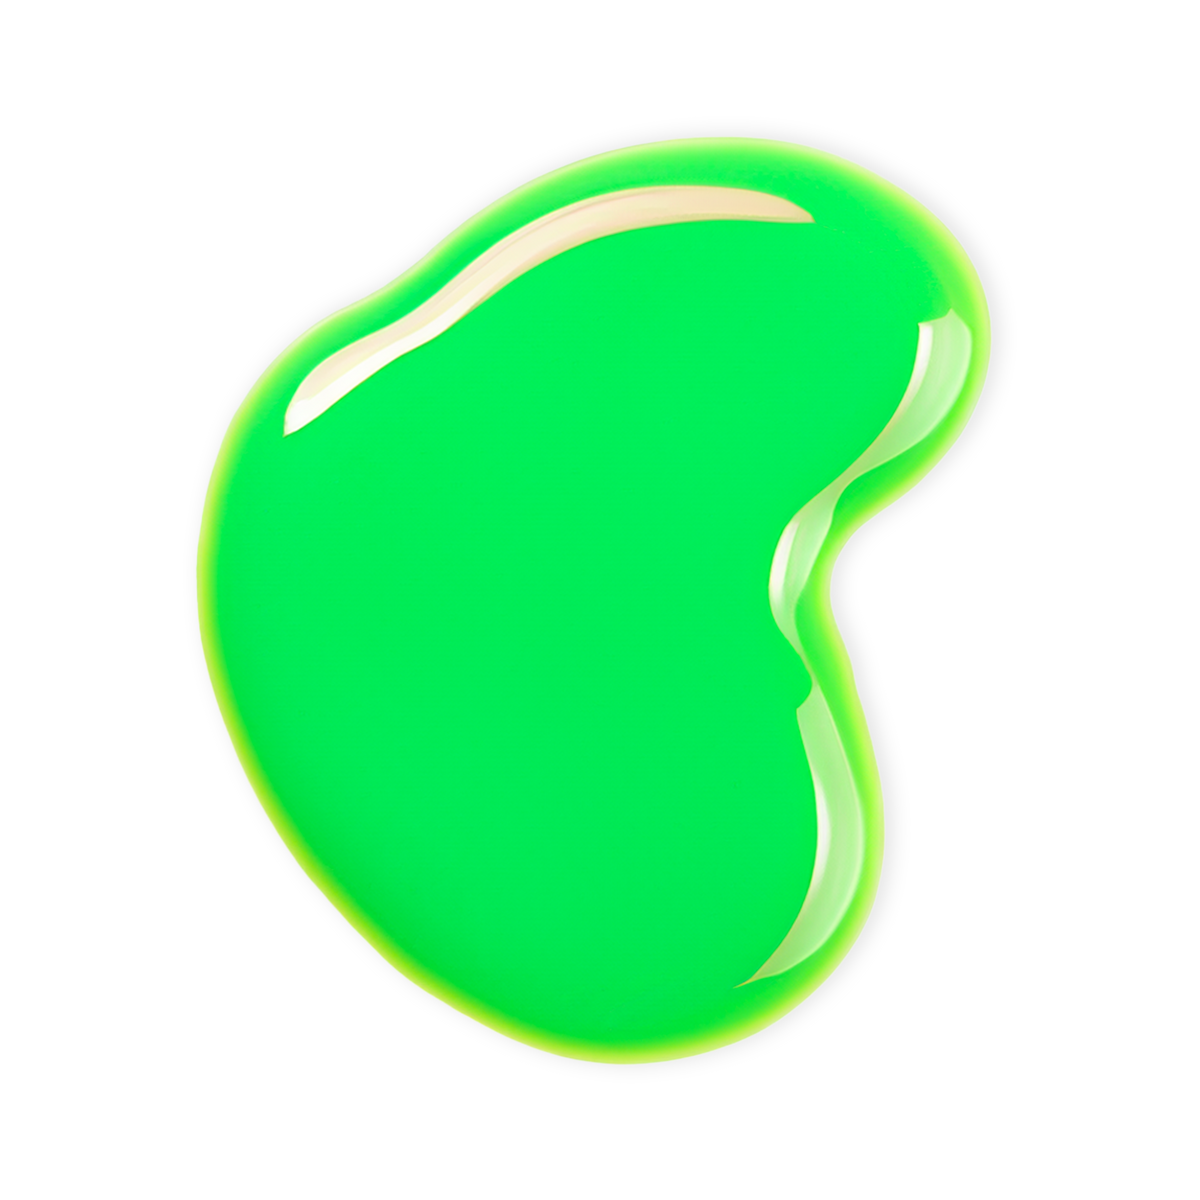 inuwet water based nail polish - fluoro green watermelon